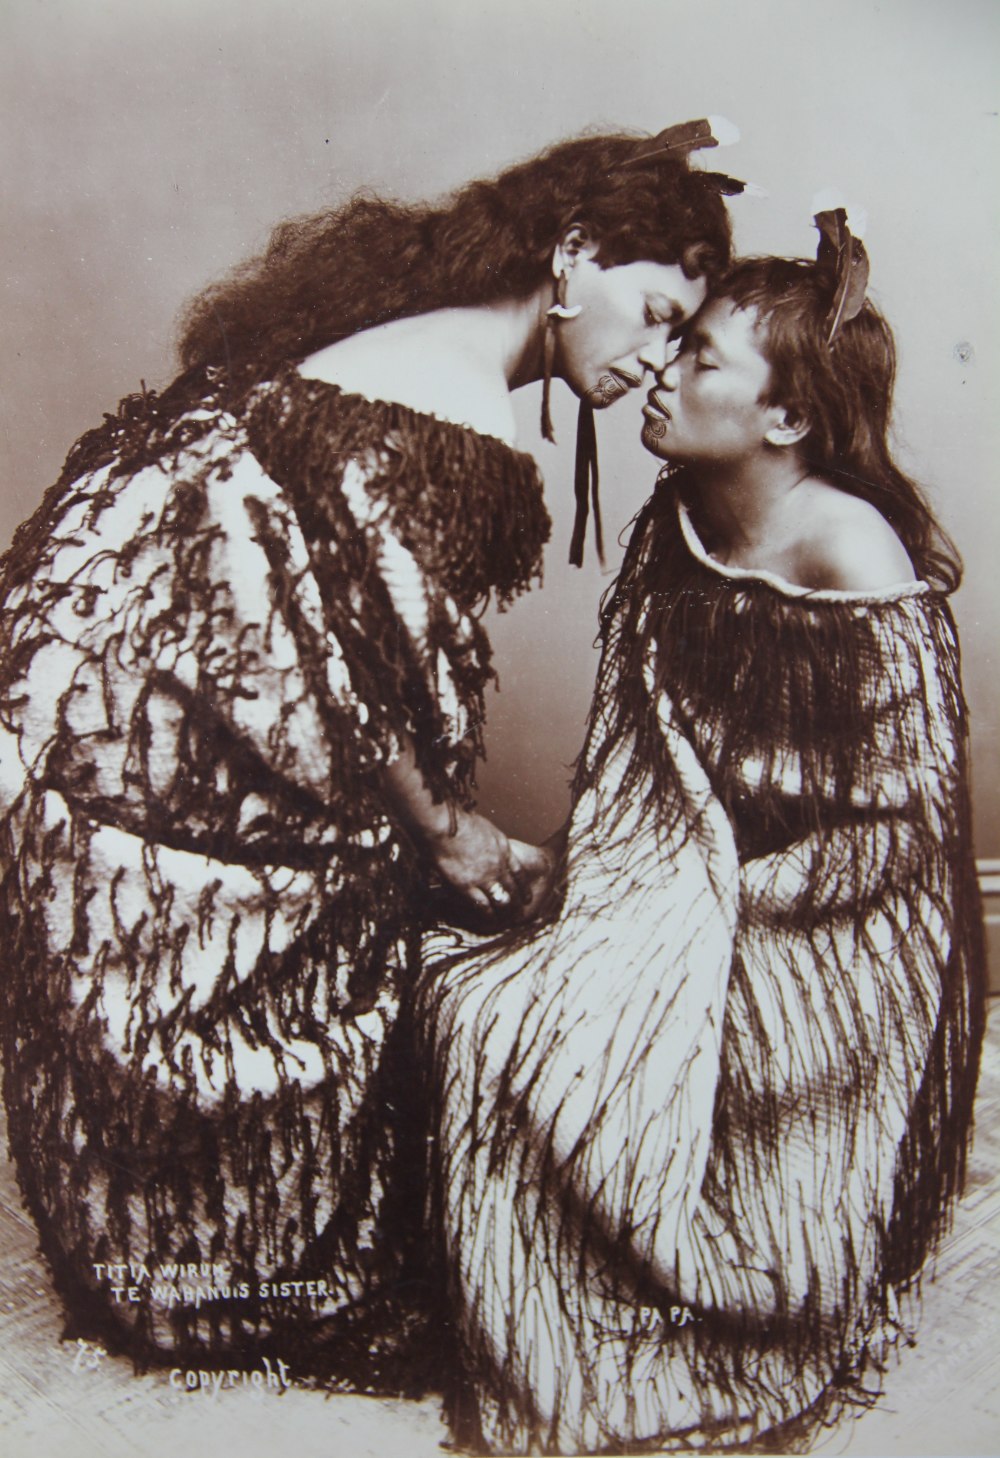 Elizabeth Pulman (1836-1900), 'Tita Wirum Te Wahanuis Sisters', an albumen photograph,